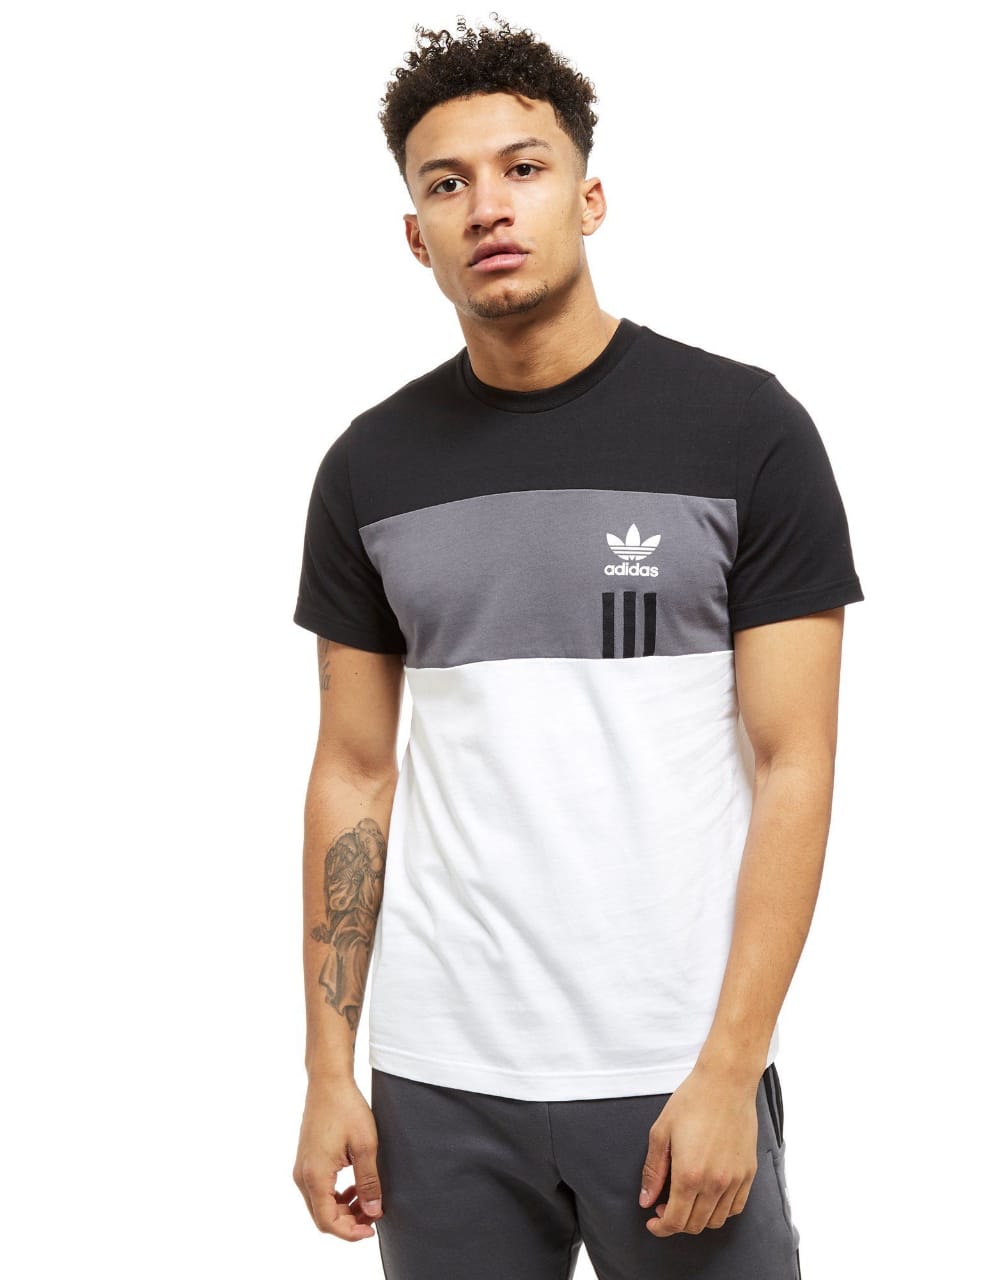 Buy Adidas Men's Black Polyester T-Shirt Online - Get 9% Off